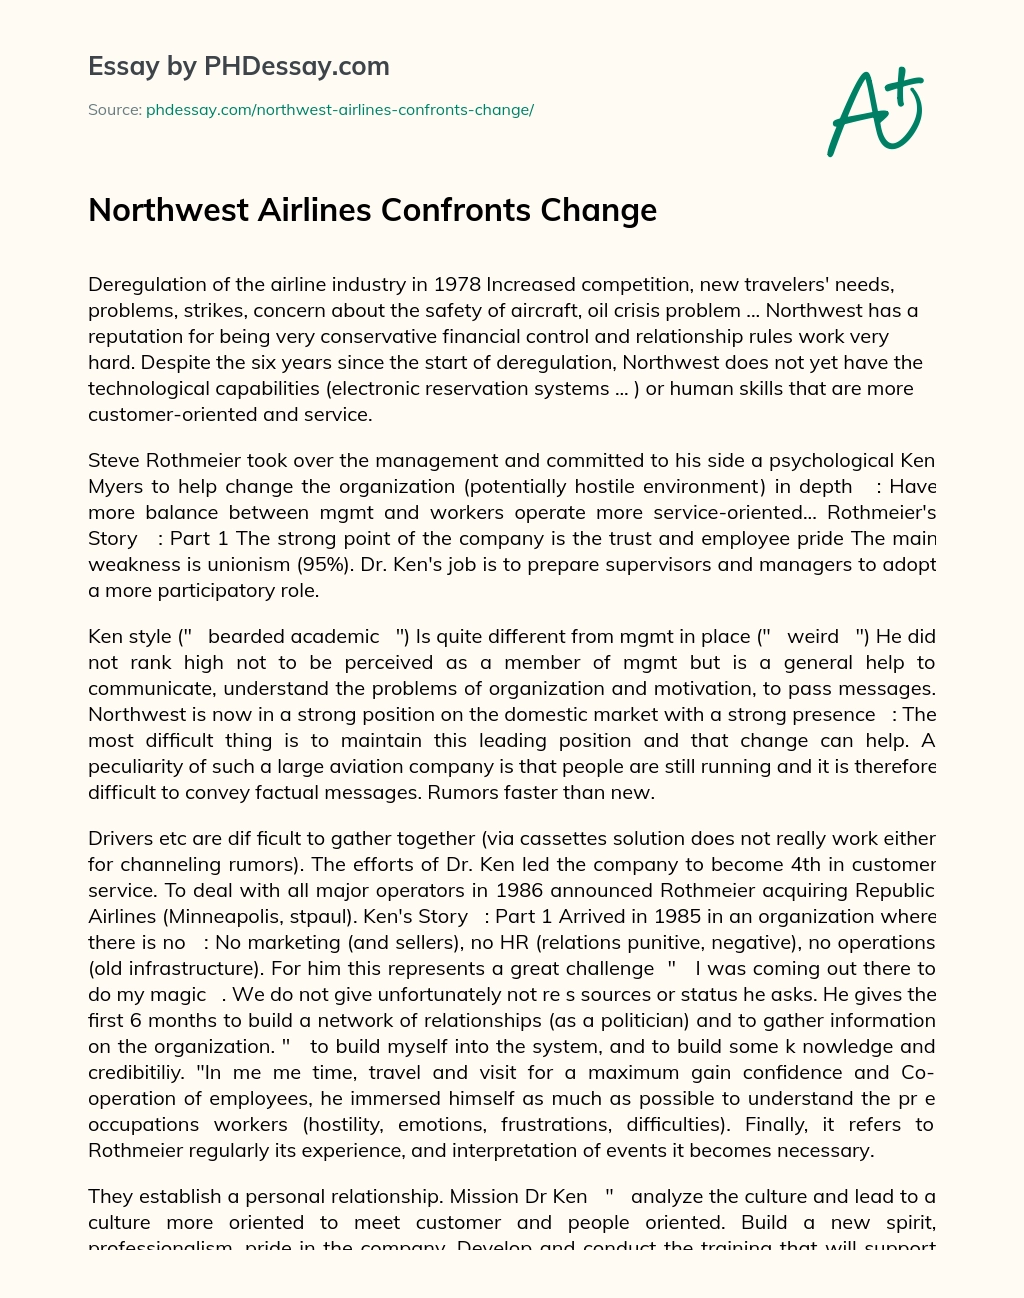 Northwest Airlines Confronts Change essay